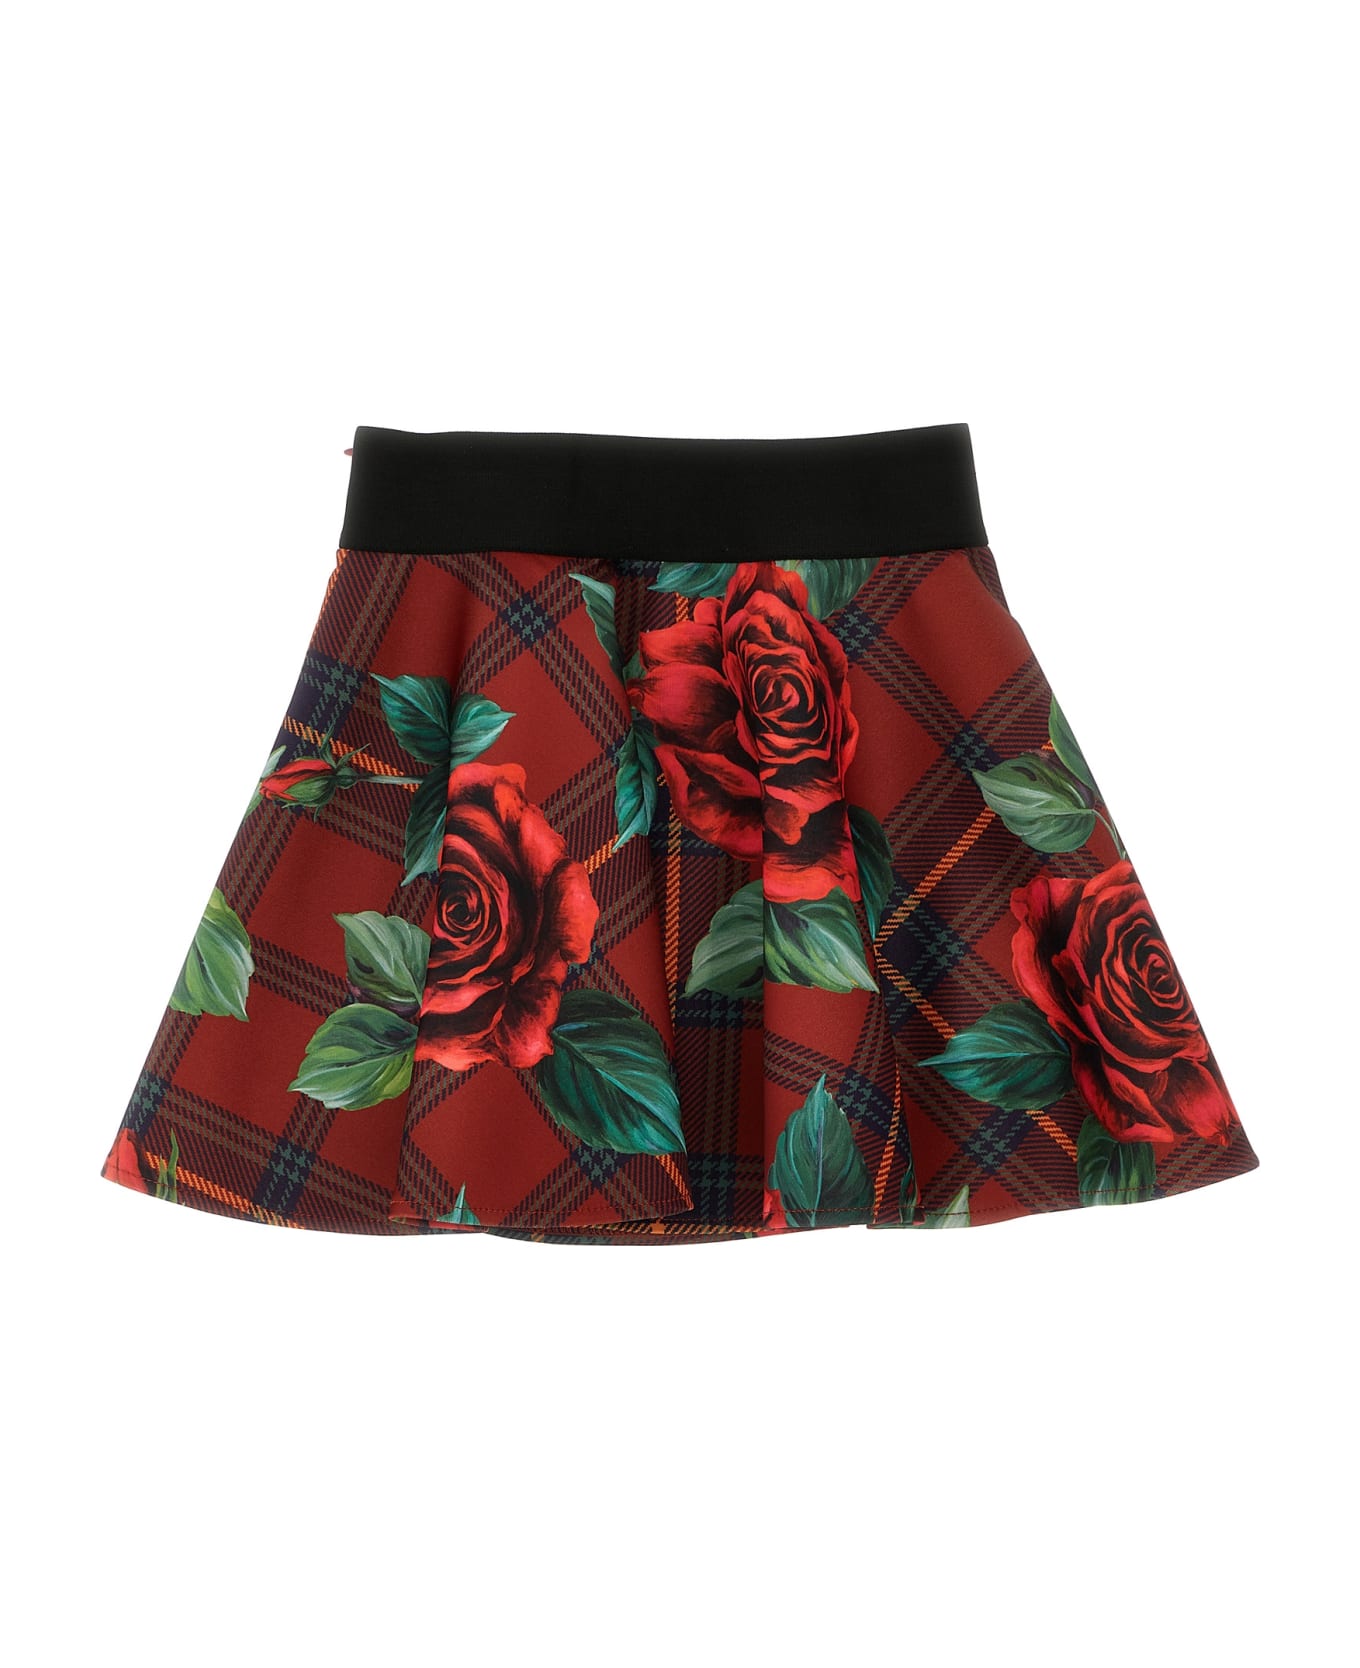 Dolce & Gabbana 'back To School' Skirt